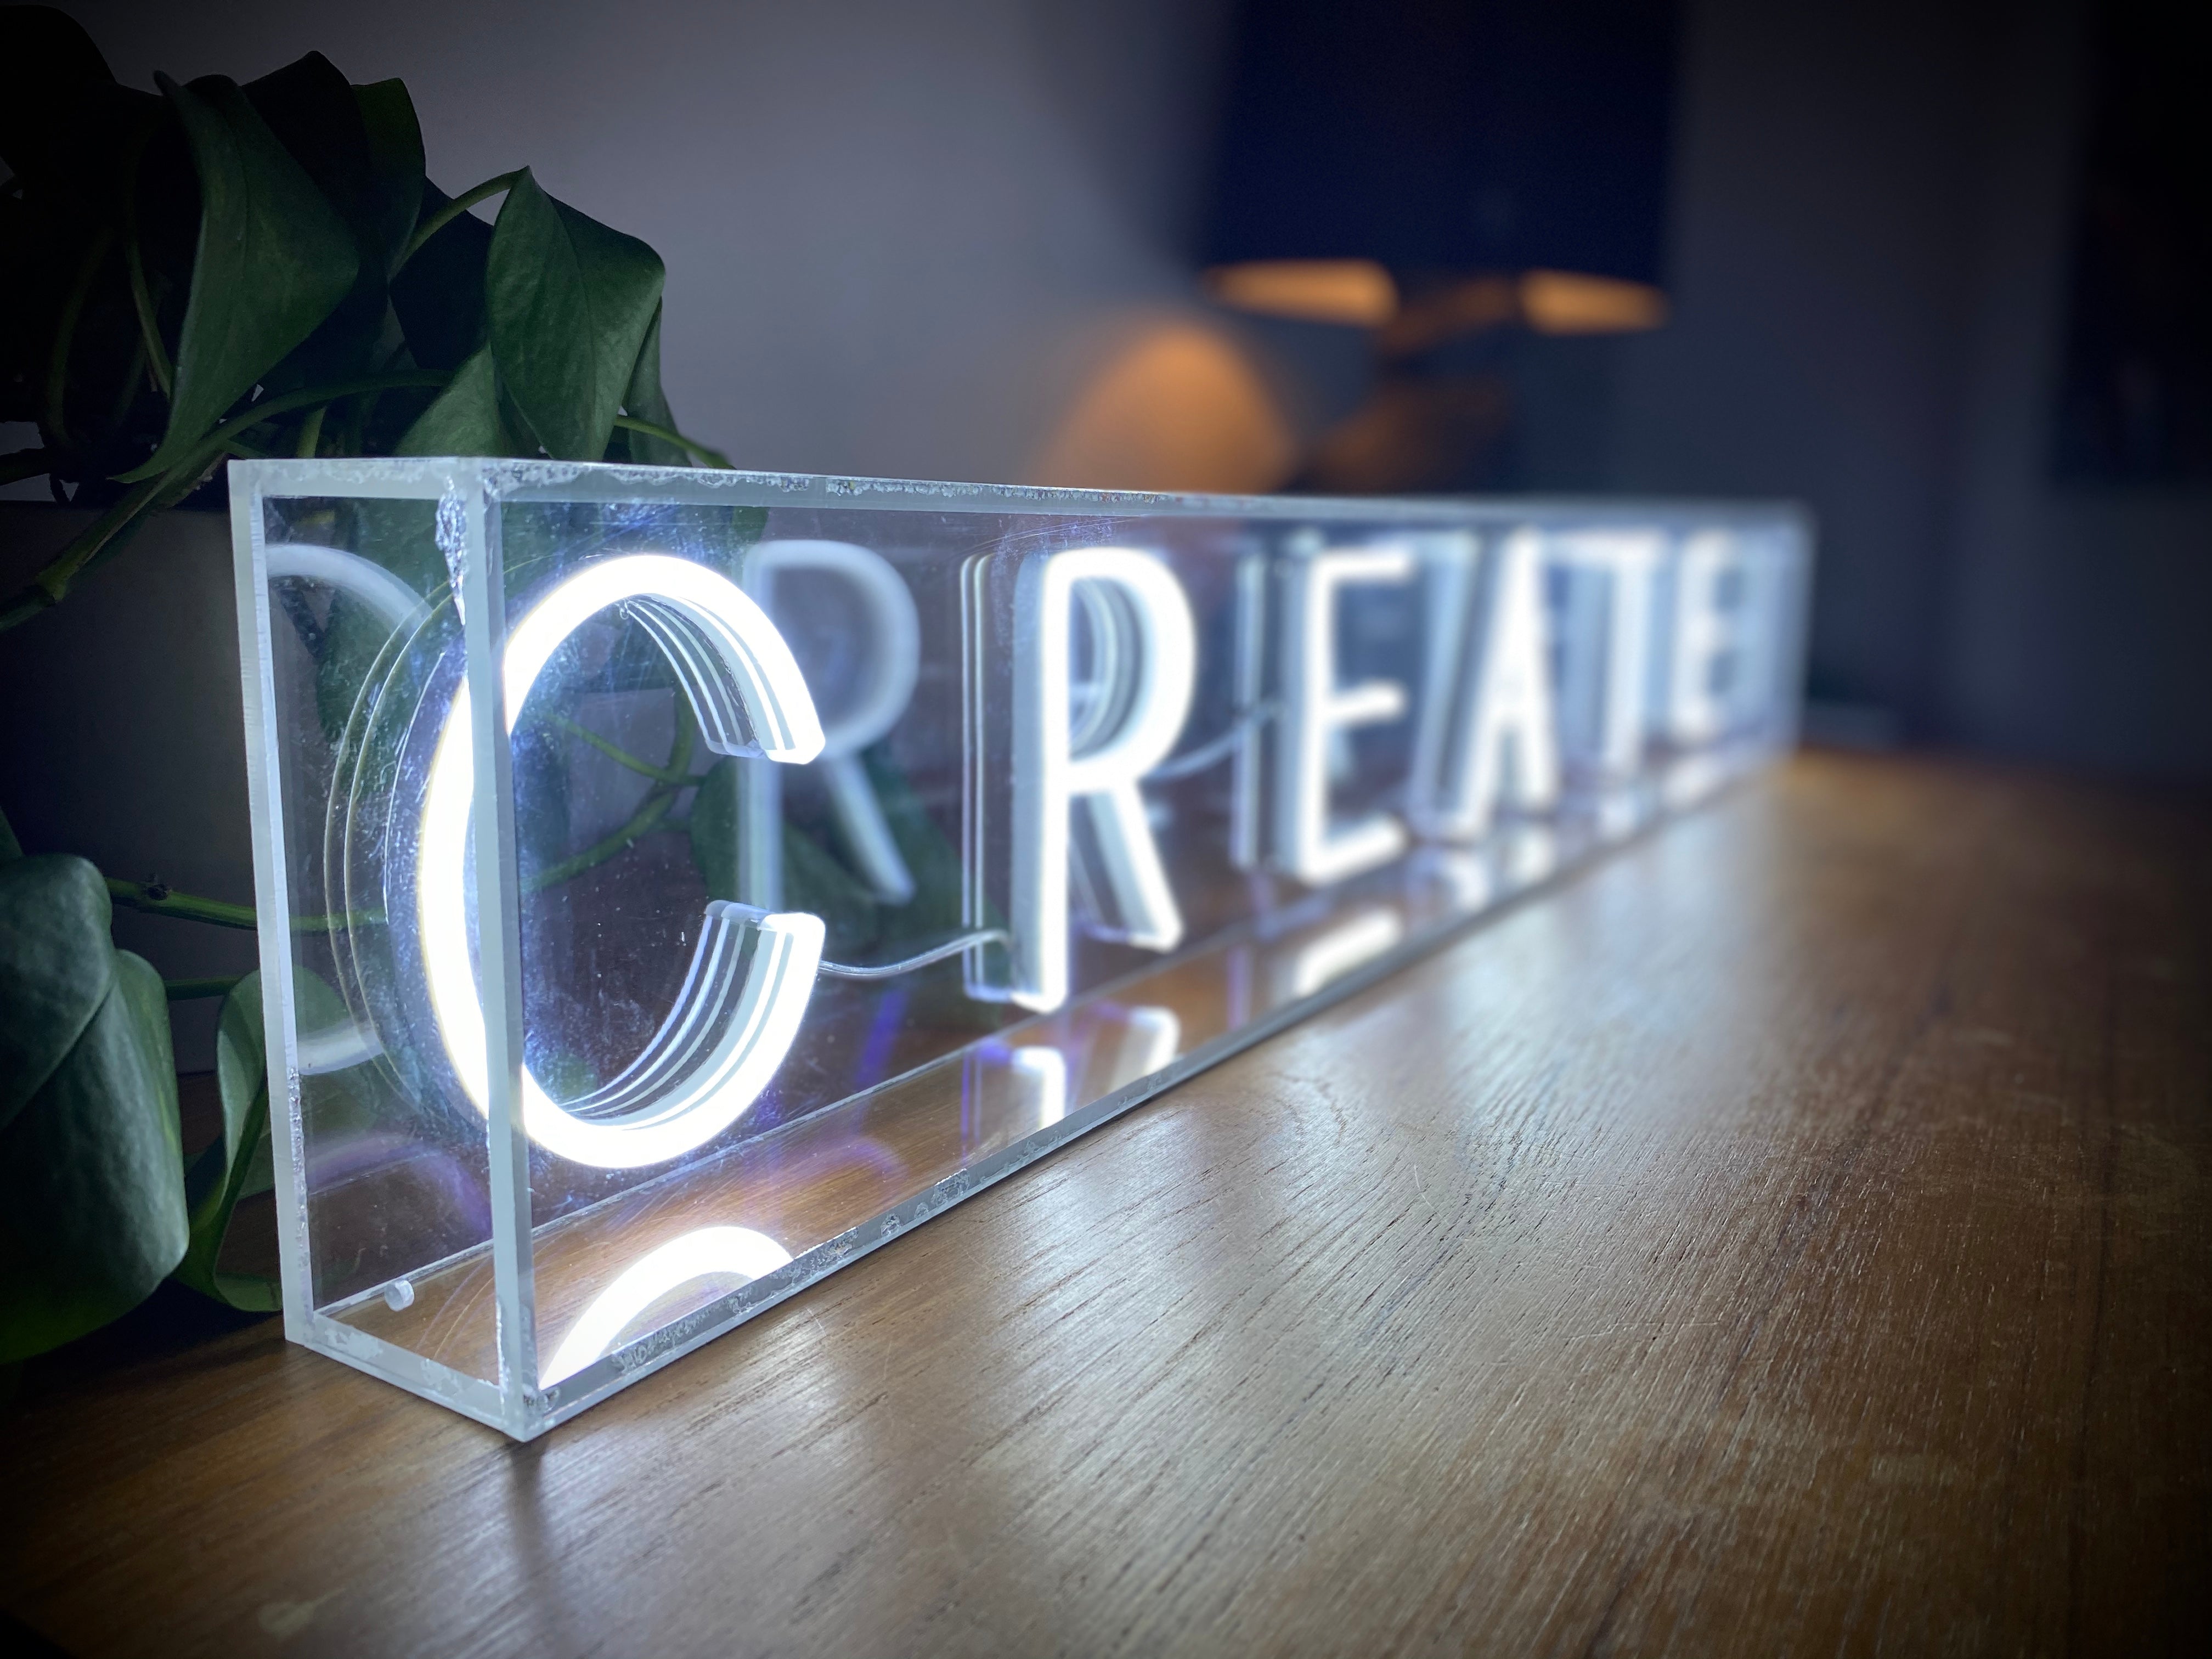 LED Neon Sign - CREATE Light Box